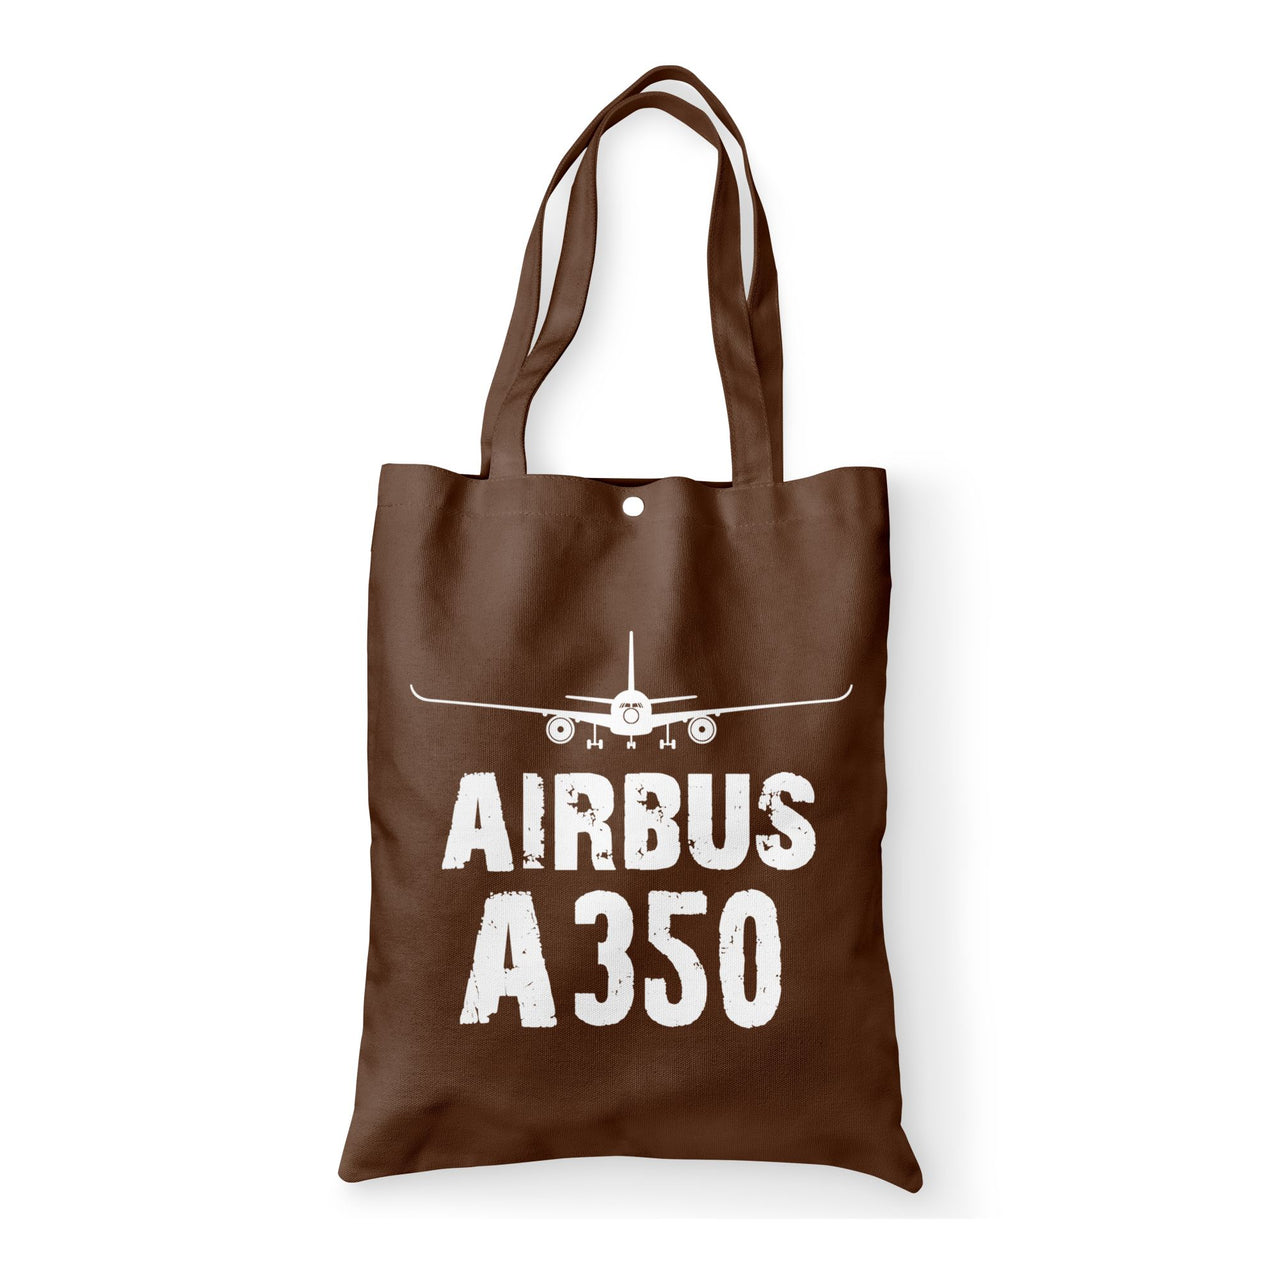 Airbus A350 & Plane Designed Tote Bags